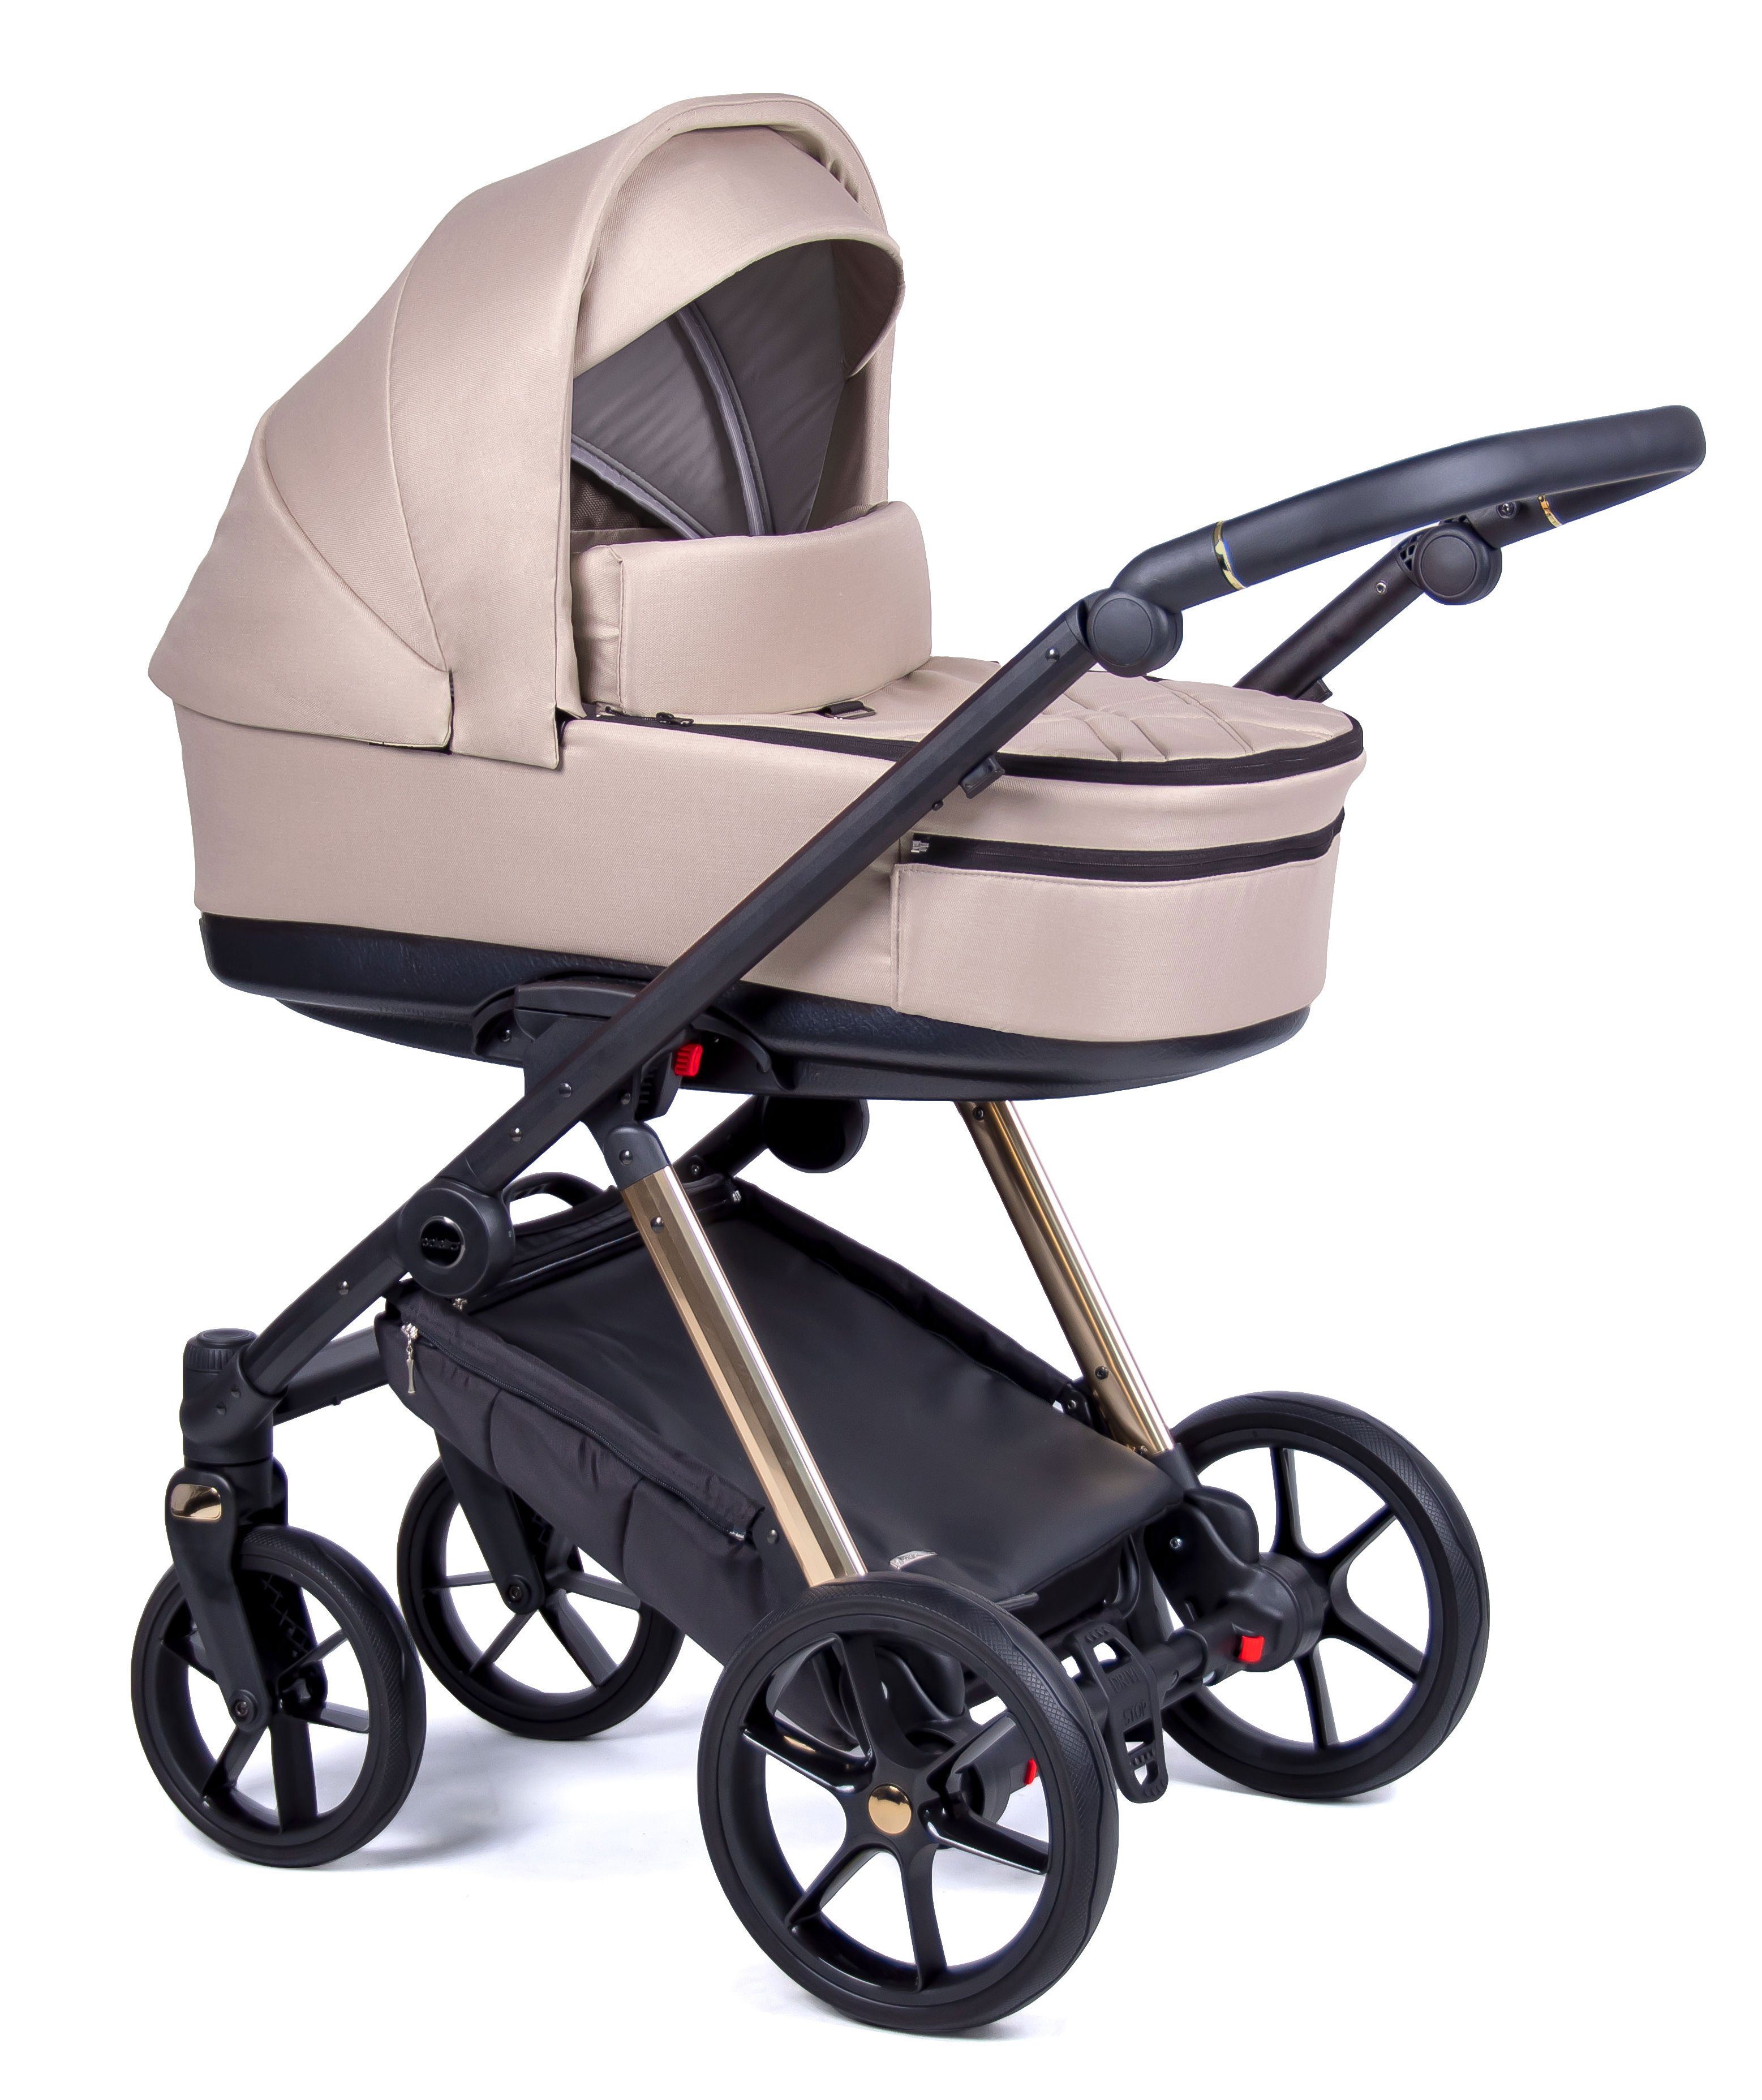 babies-on-wheels Kombi-Kinderwagen 2 24 14 in - gold 1 = Teile Sand Kinderwagen-Set - Axxis in Designs Gestell